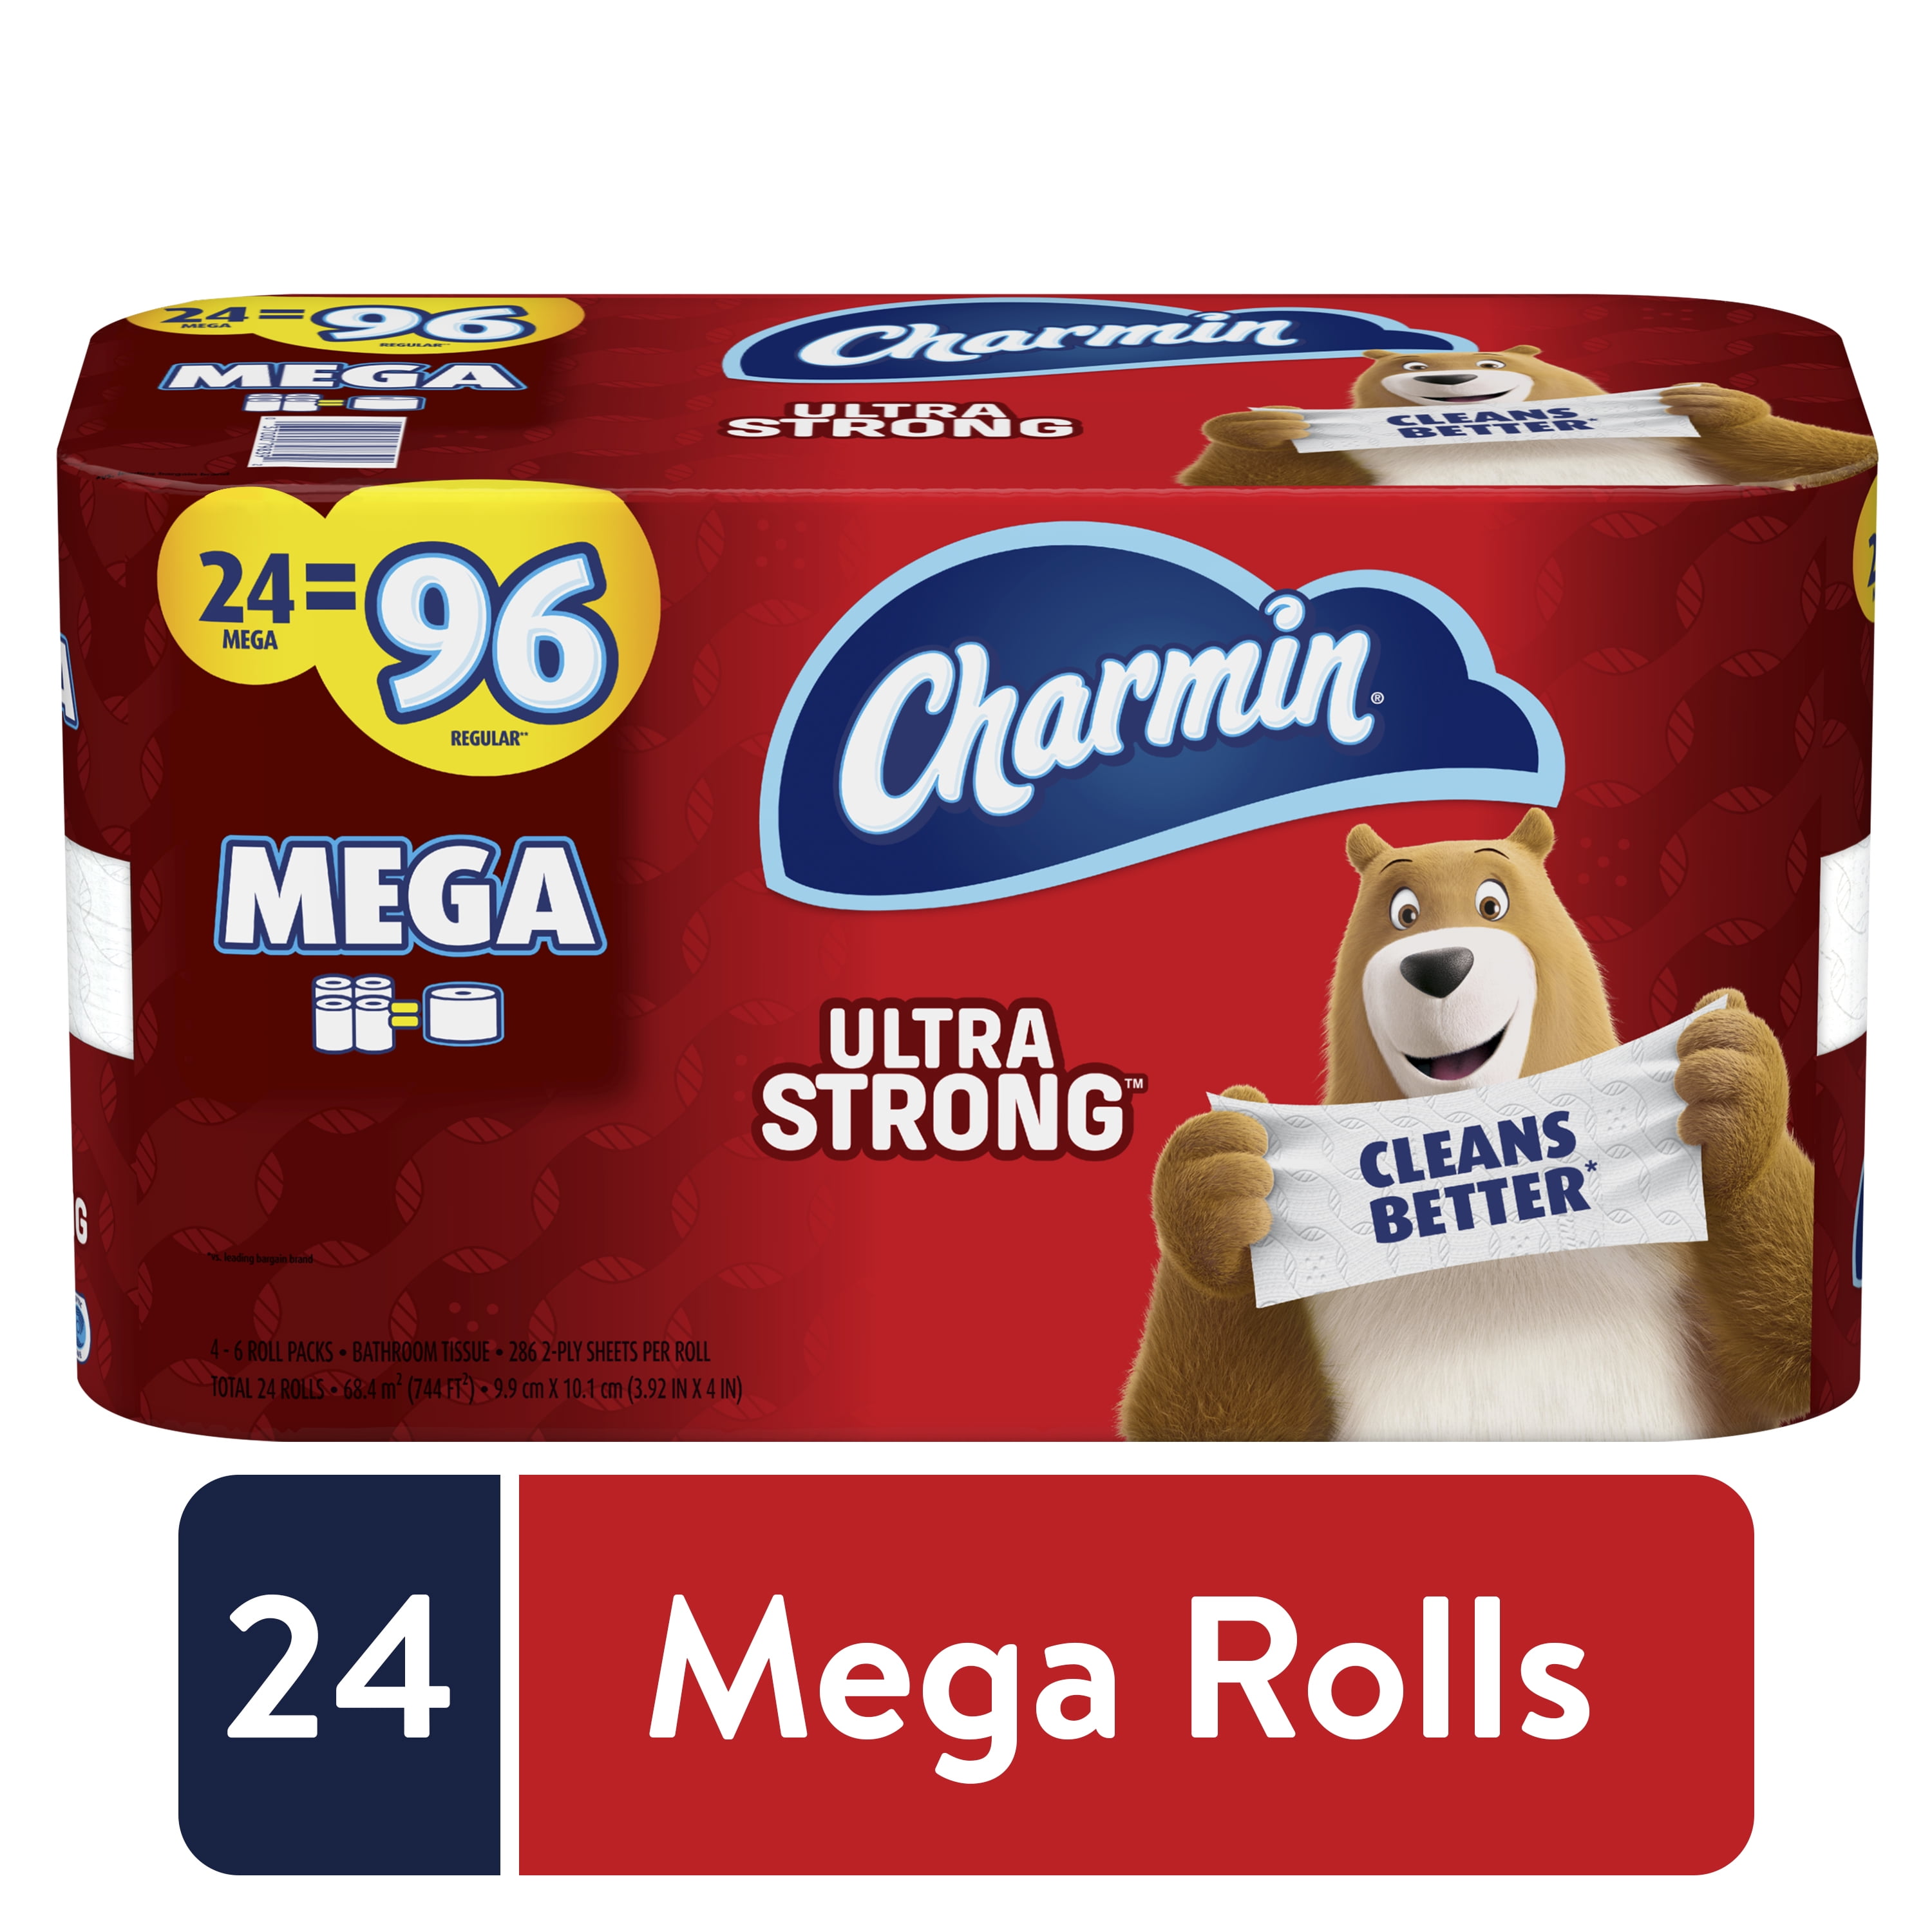 18-Mega Plus Rolls Details about   Ultra-Strong Toilet Paper 